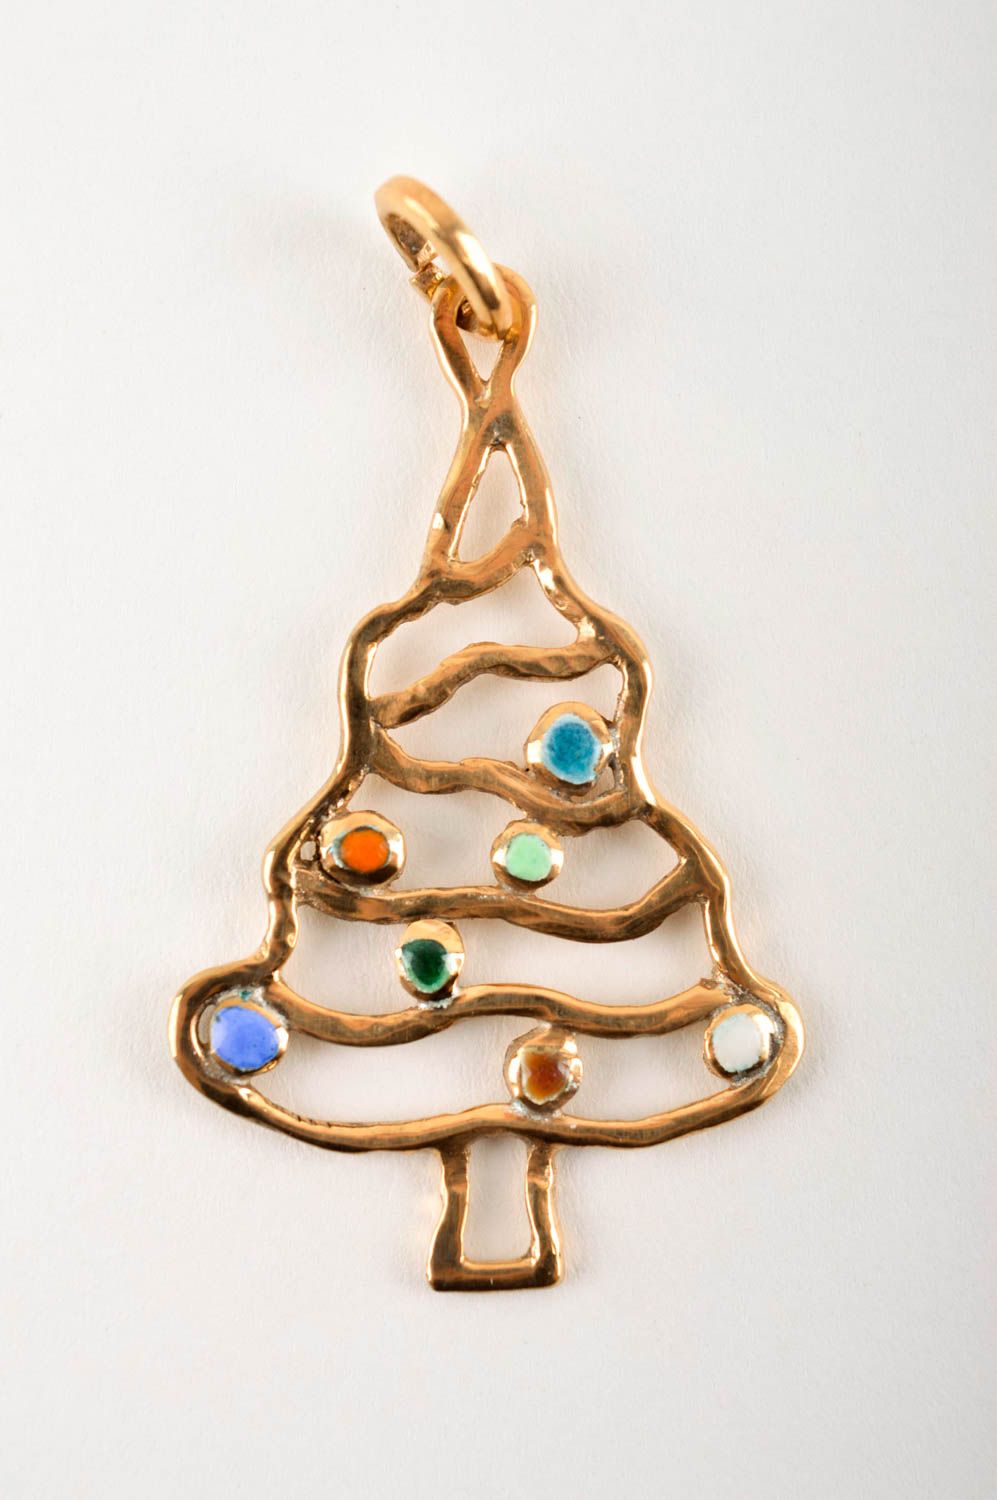 Homemade jewelry designer necklace pendant necklace Christmas gift ideas photo 2